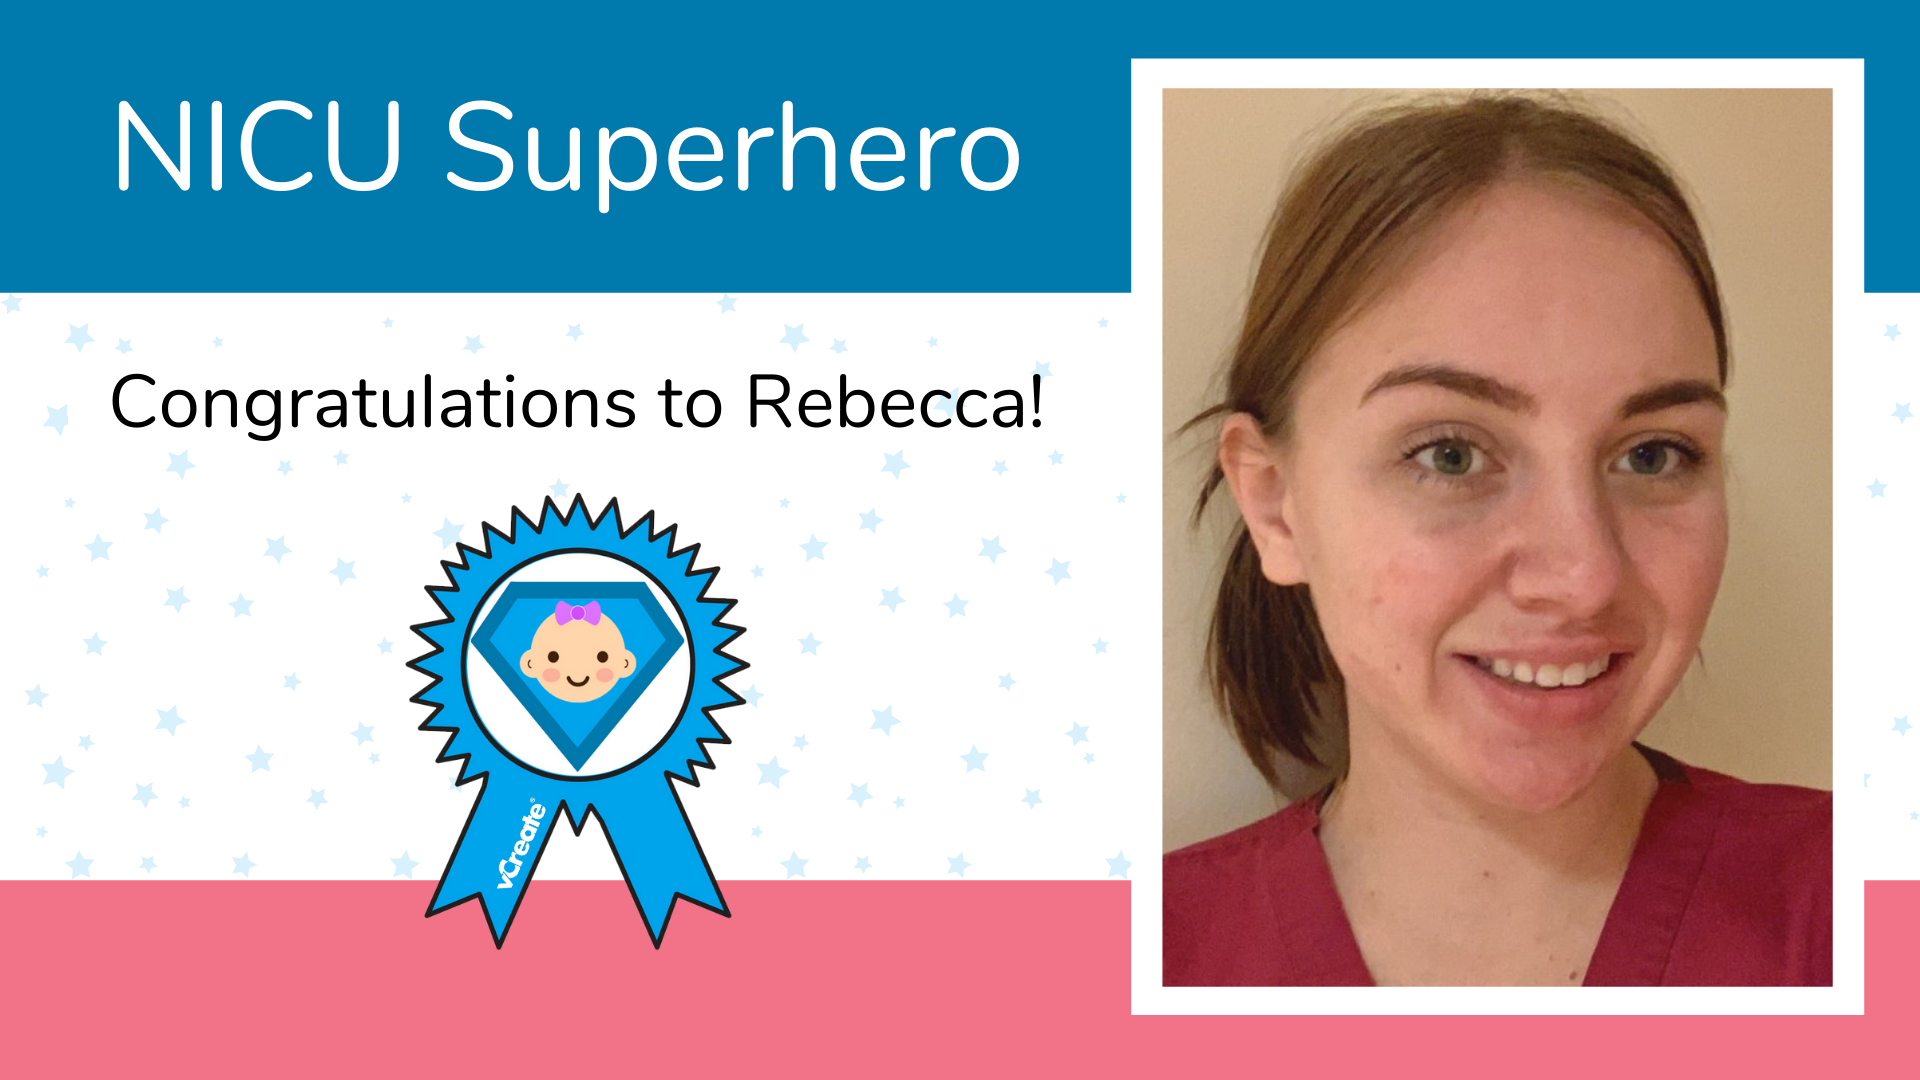 Sarah's NICU Superhero is Rebecca from William Harvey Hospital!